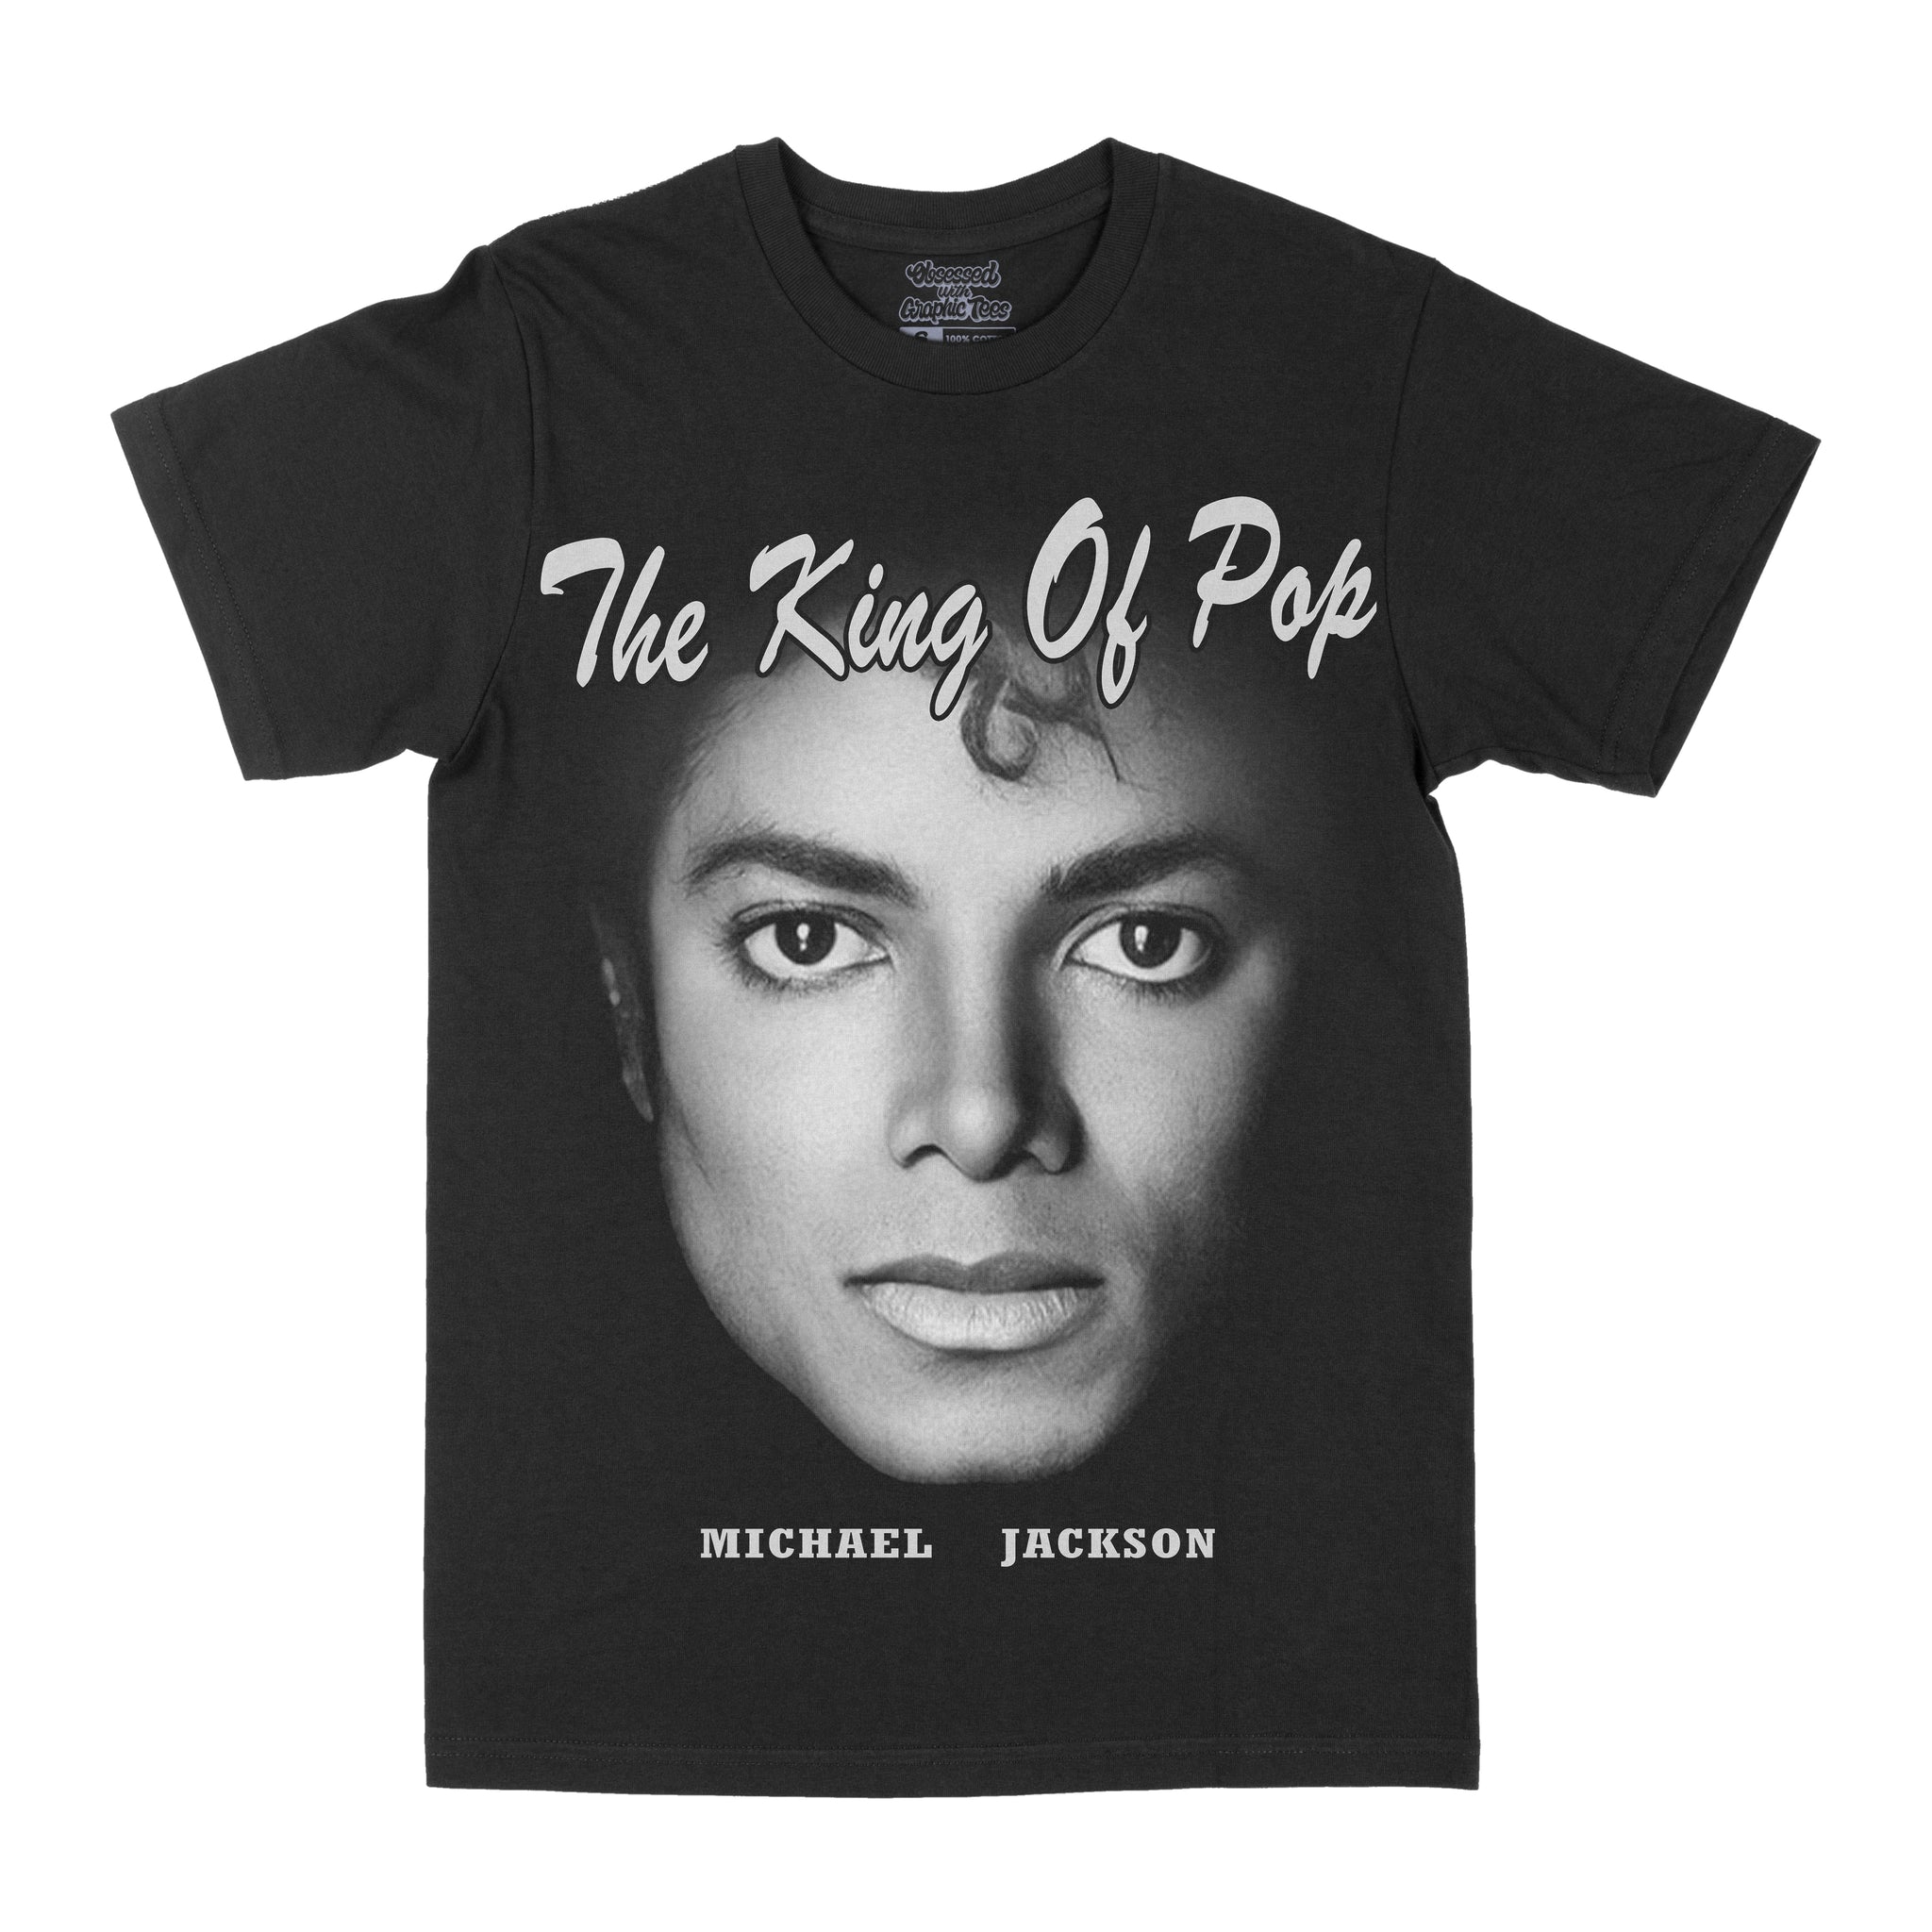 Michael Jackson "Big Face" Graphic Tee